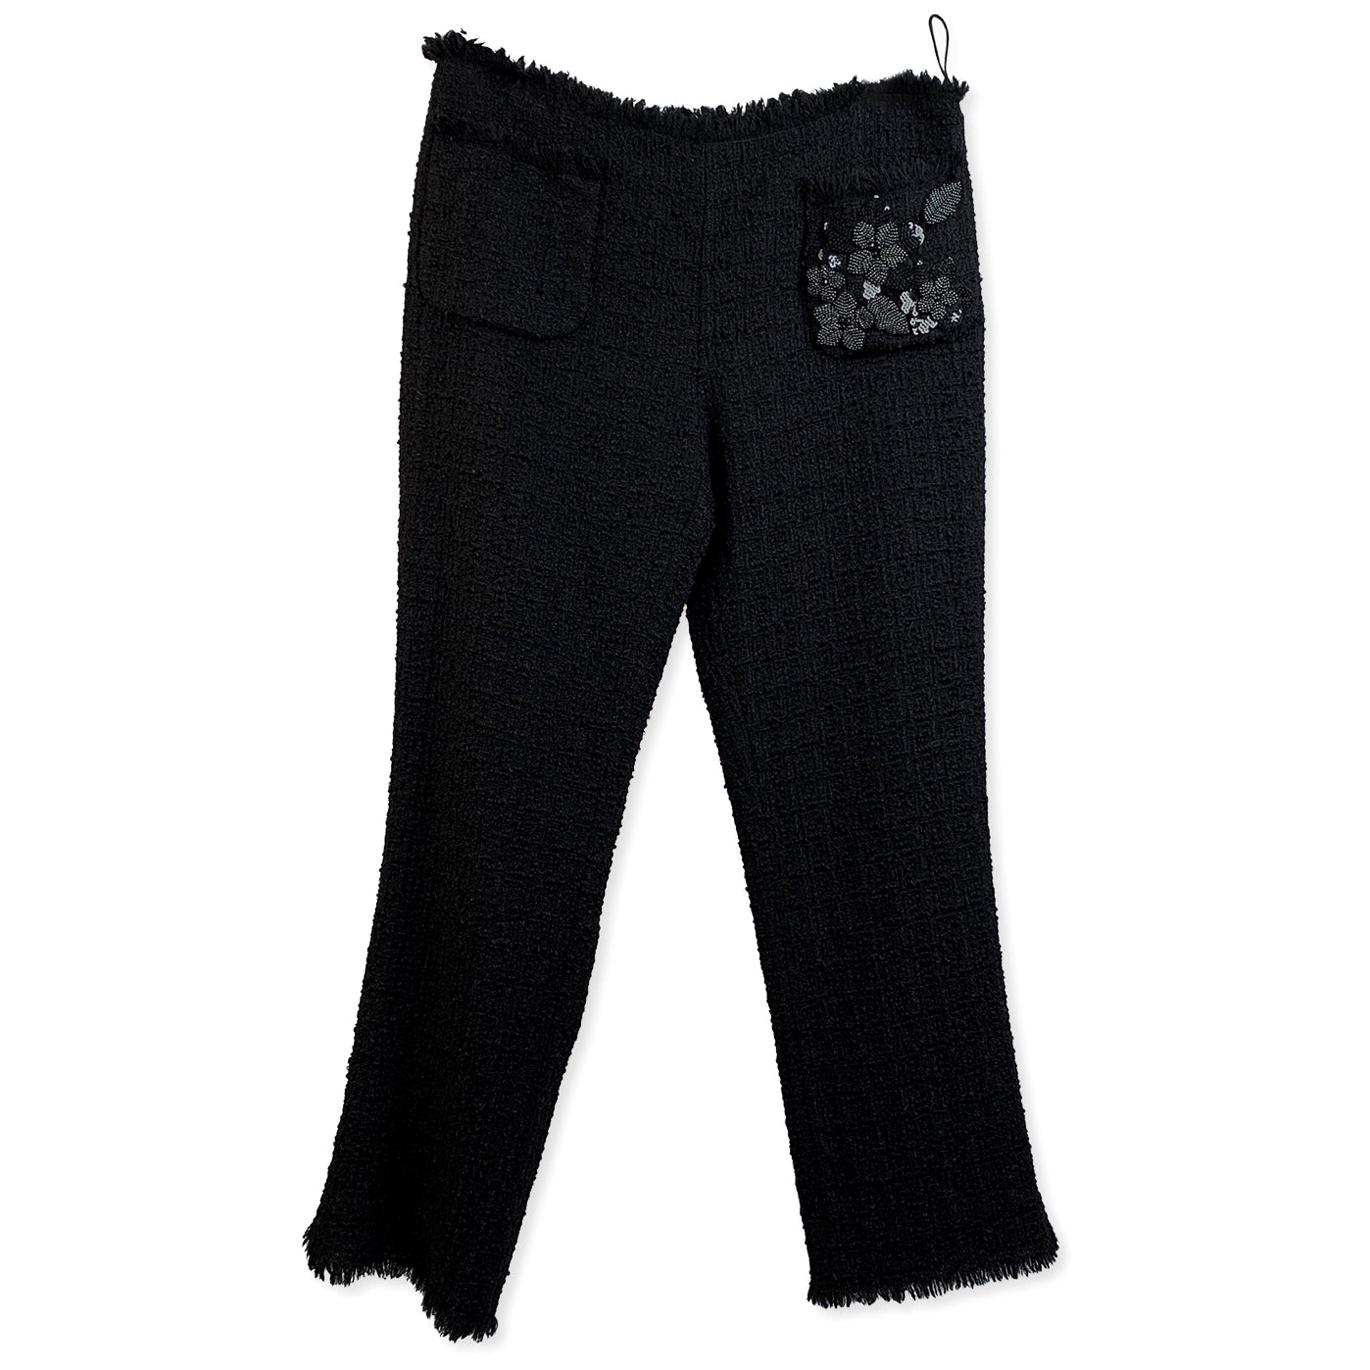 Moschino Cheap and Chic Black Wool Bouclè Trousers Size 44